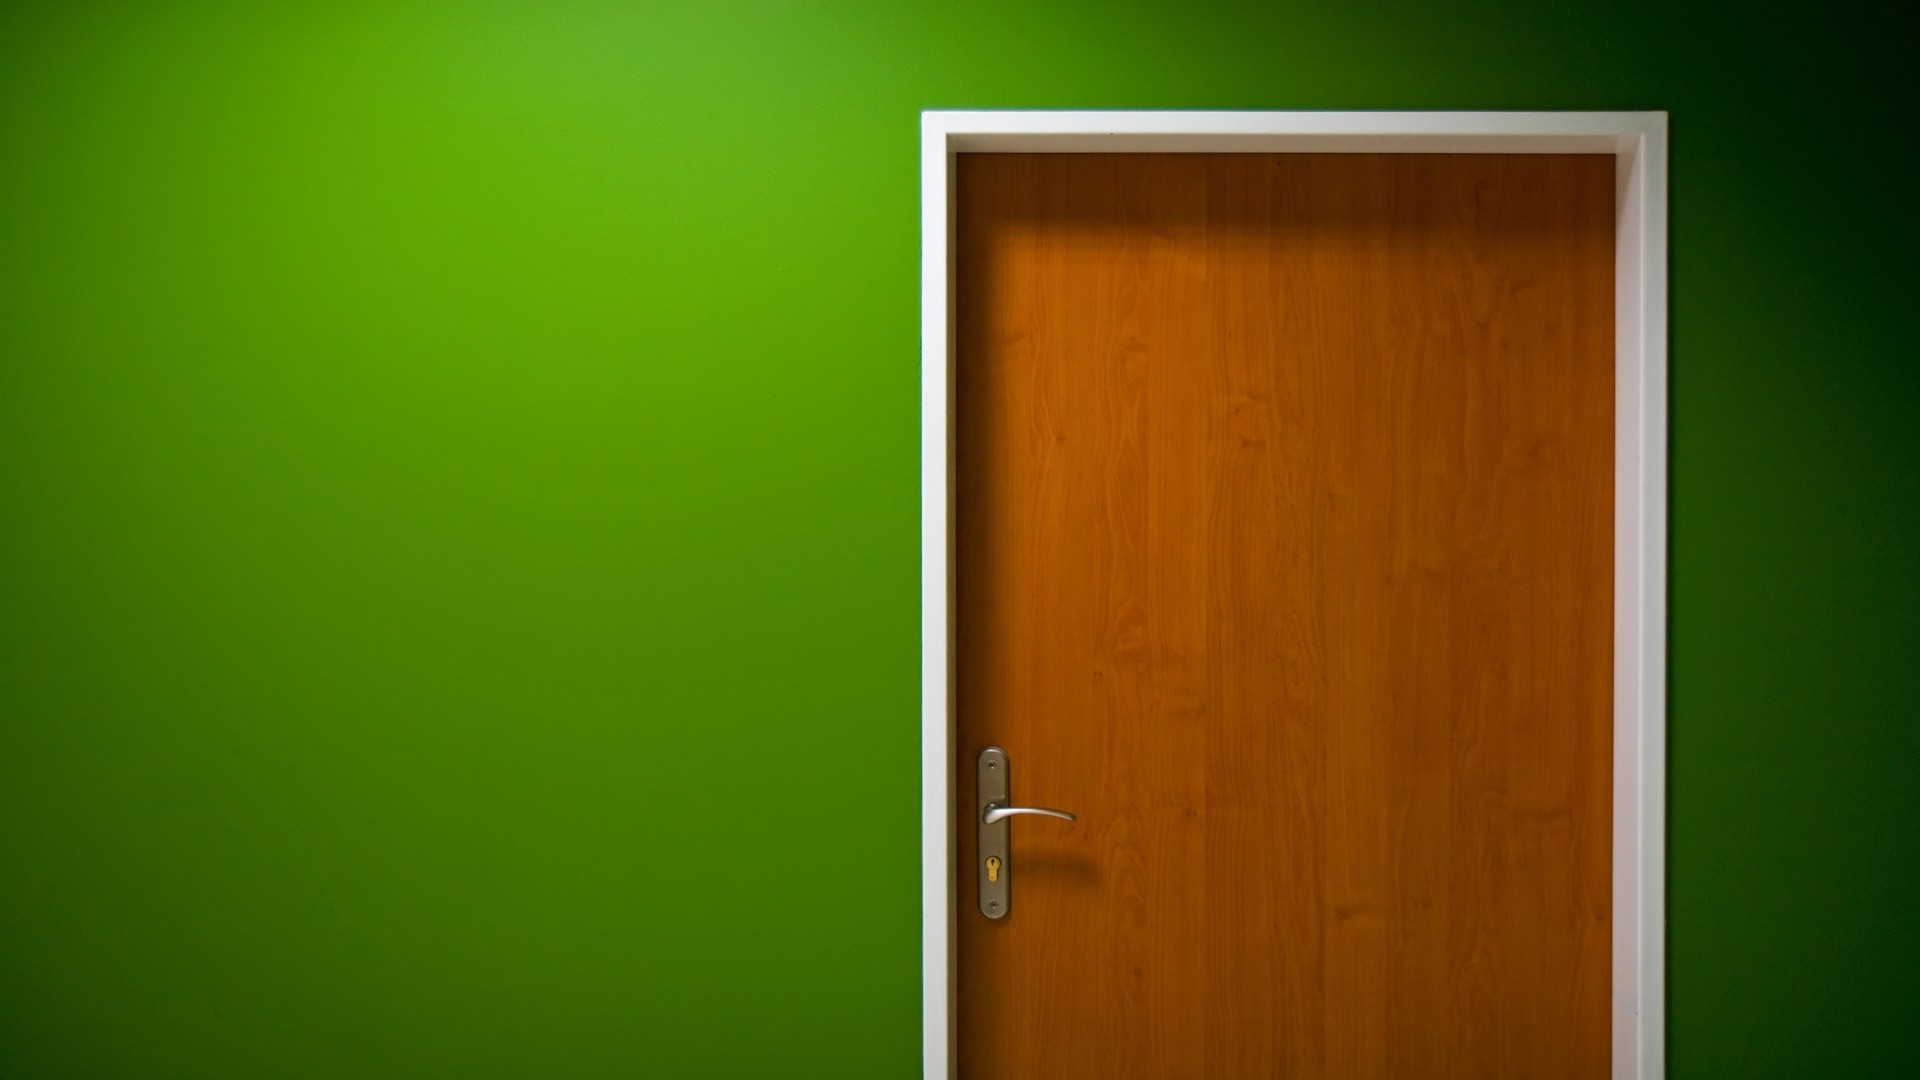 General 1920x1080 door green wall wooden surface minimalism